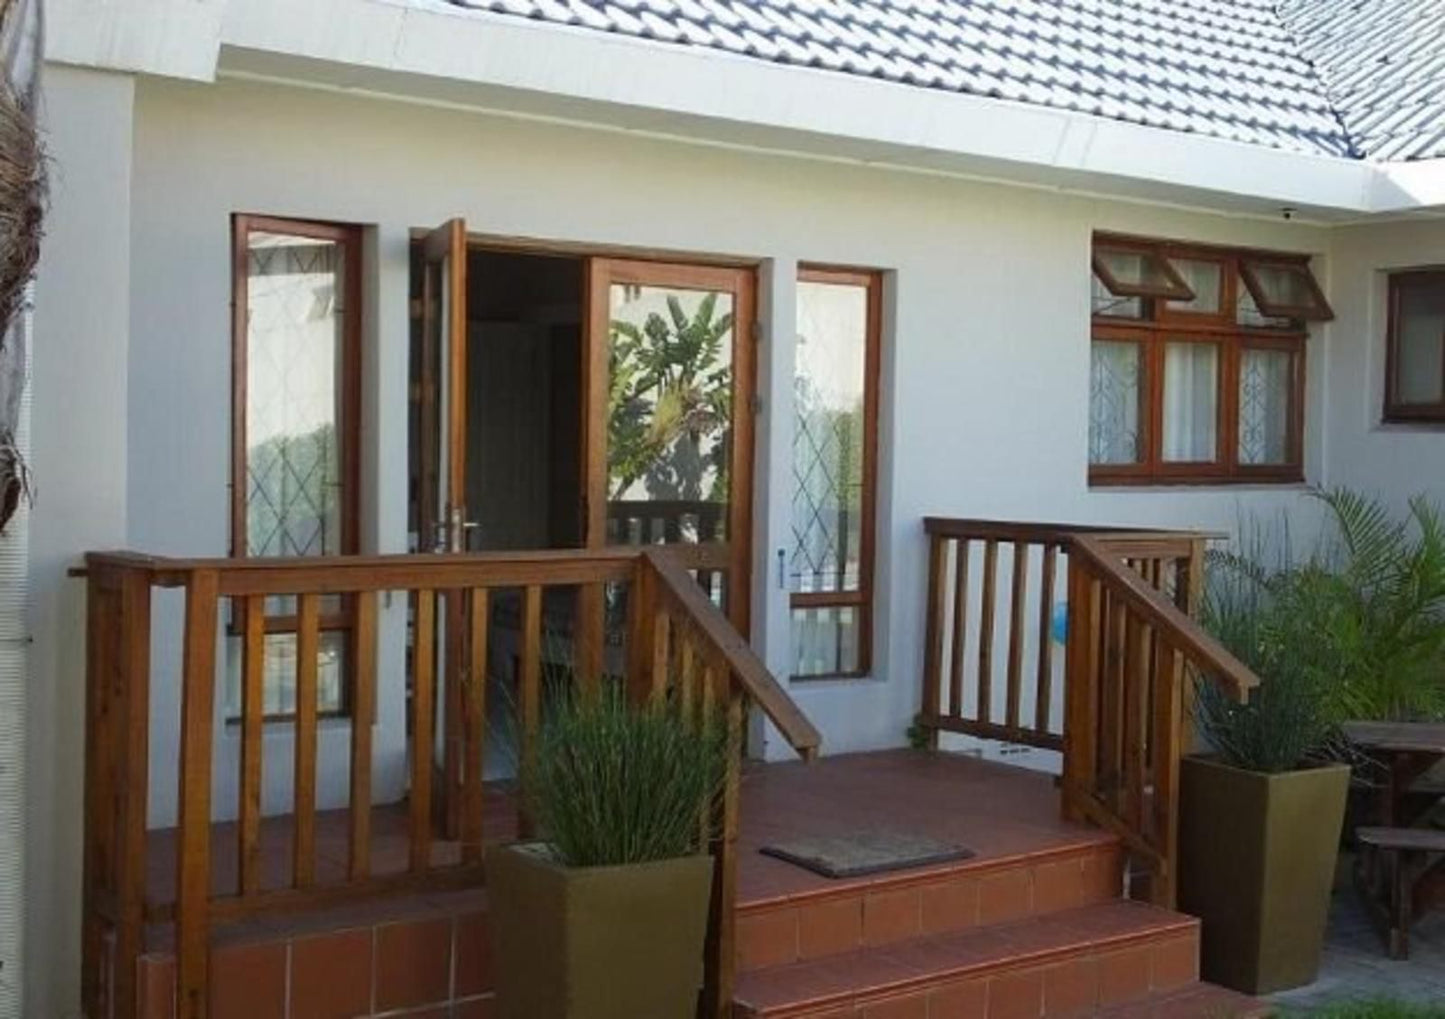 Pollok Guest Lodge Summerstrand Port Elizabeth Eastern Cape South Africa House, Building, Architecture